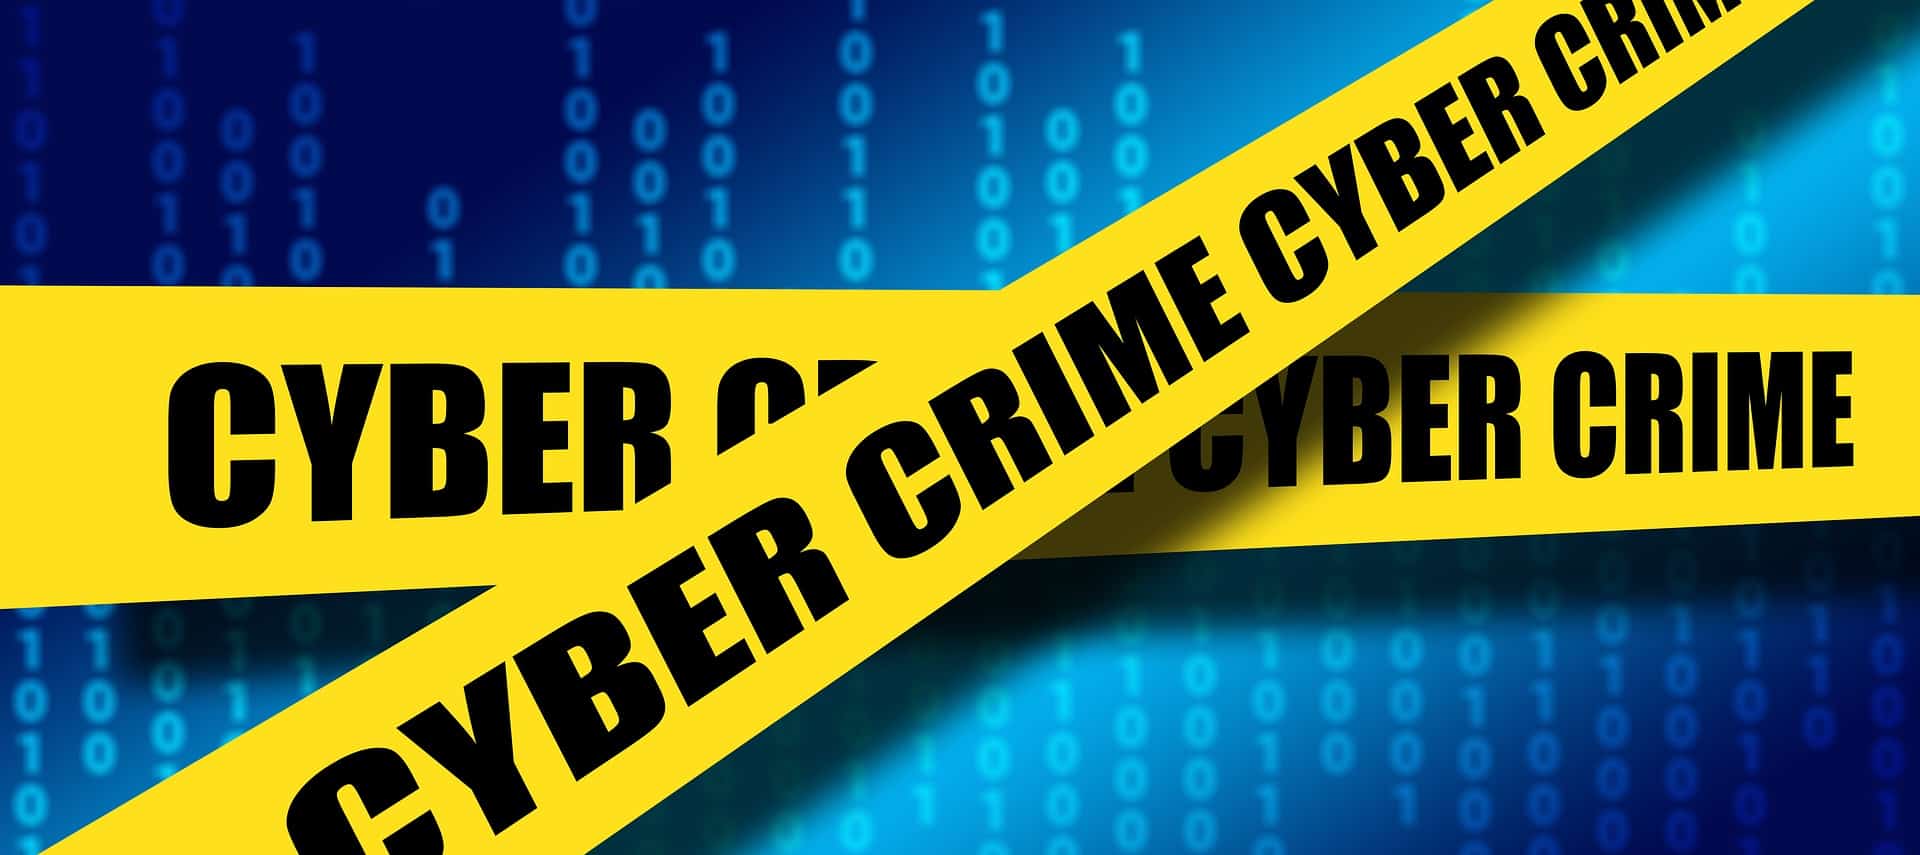 A World of Internet Crimes – Latest Statistics